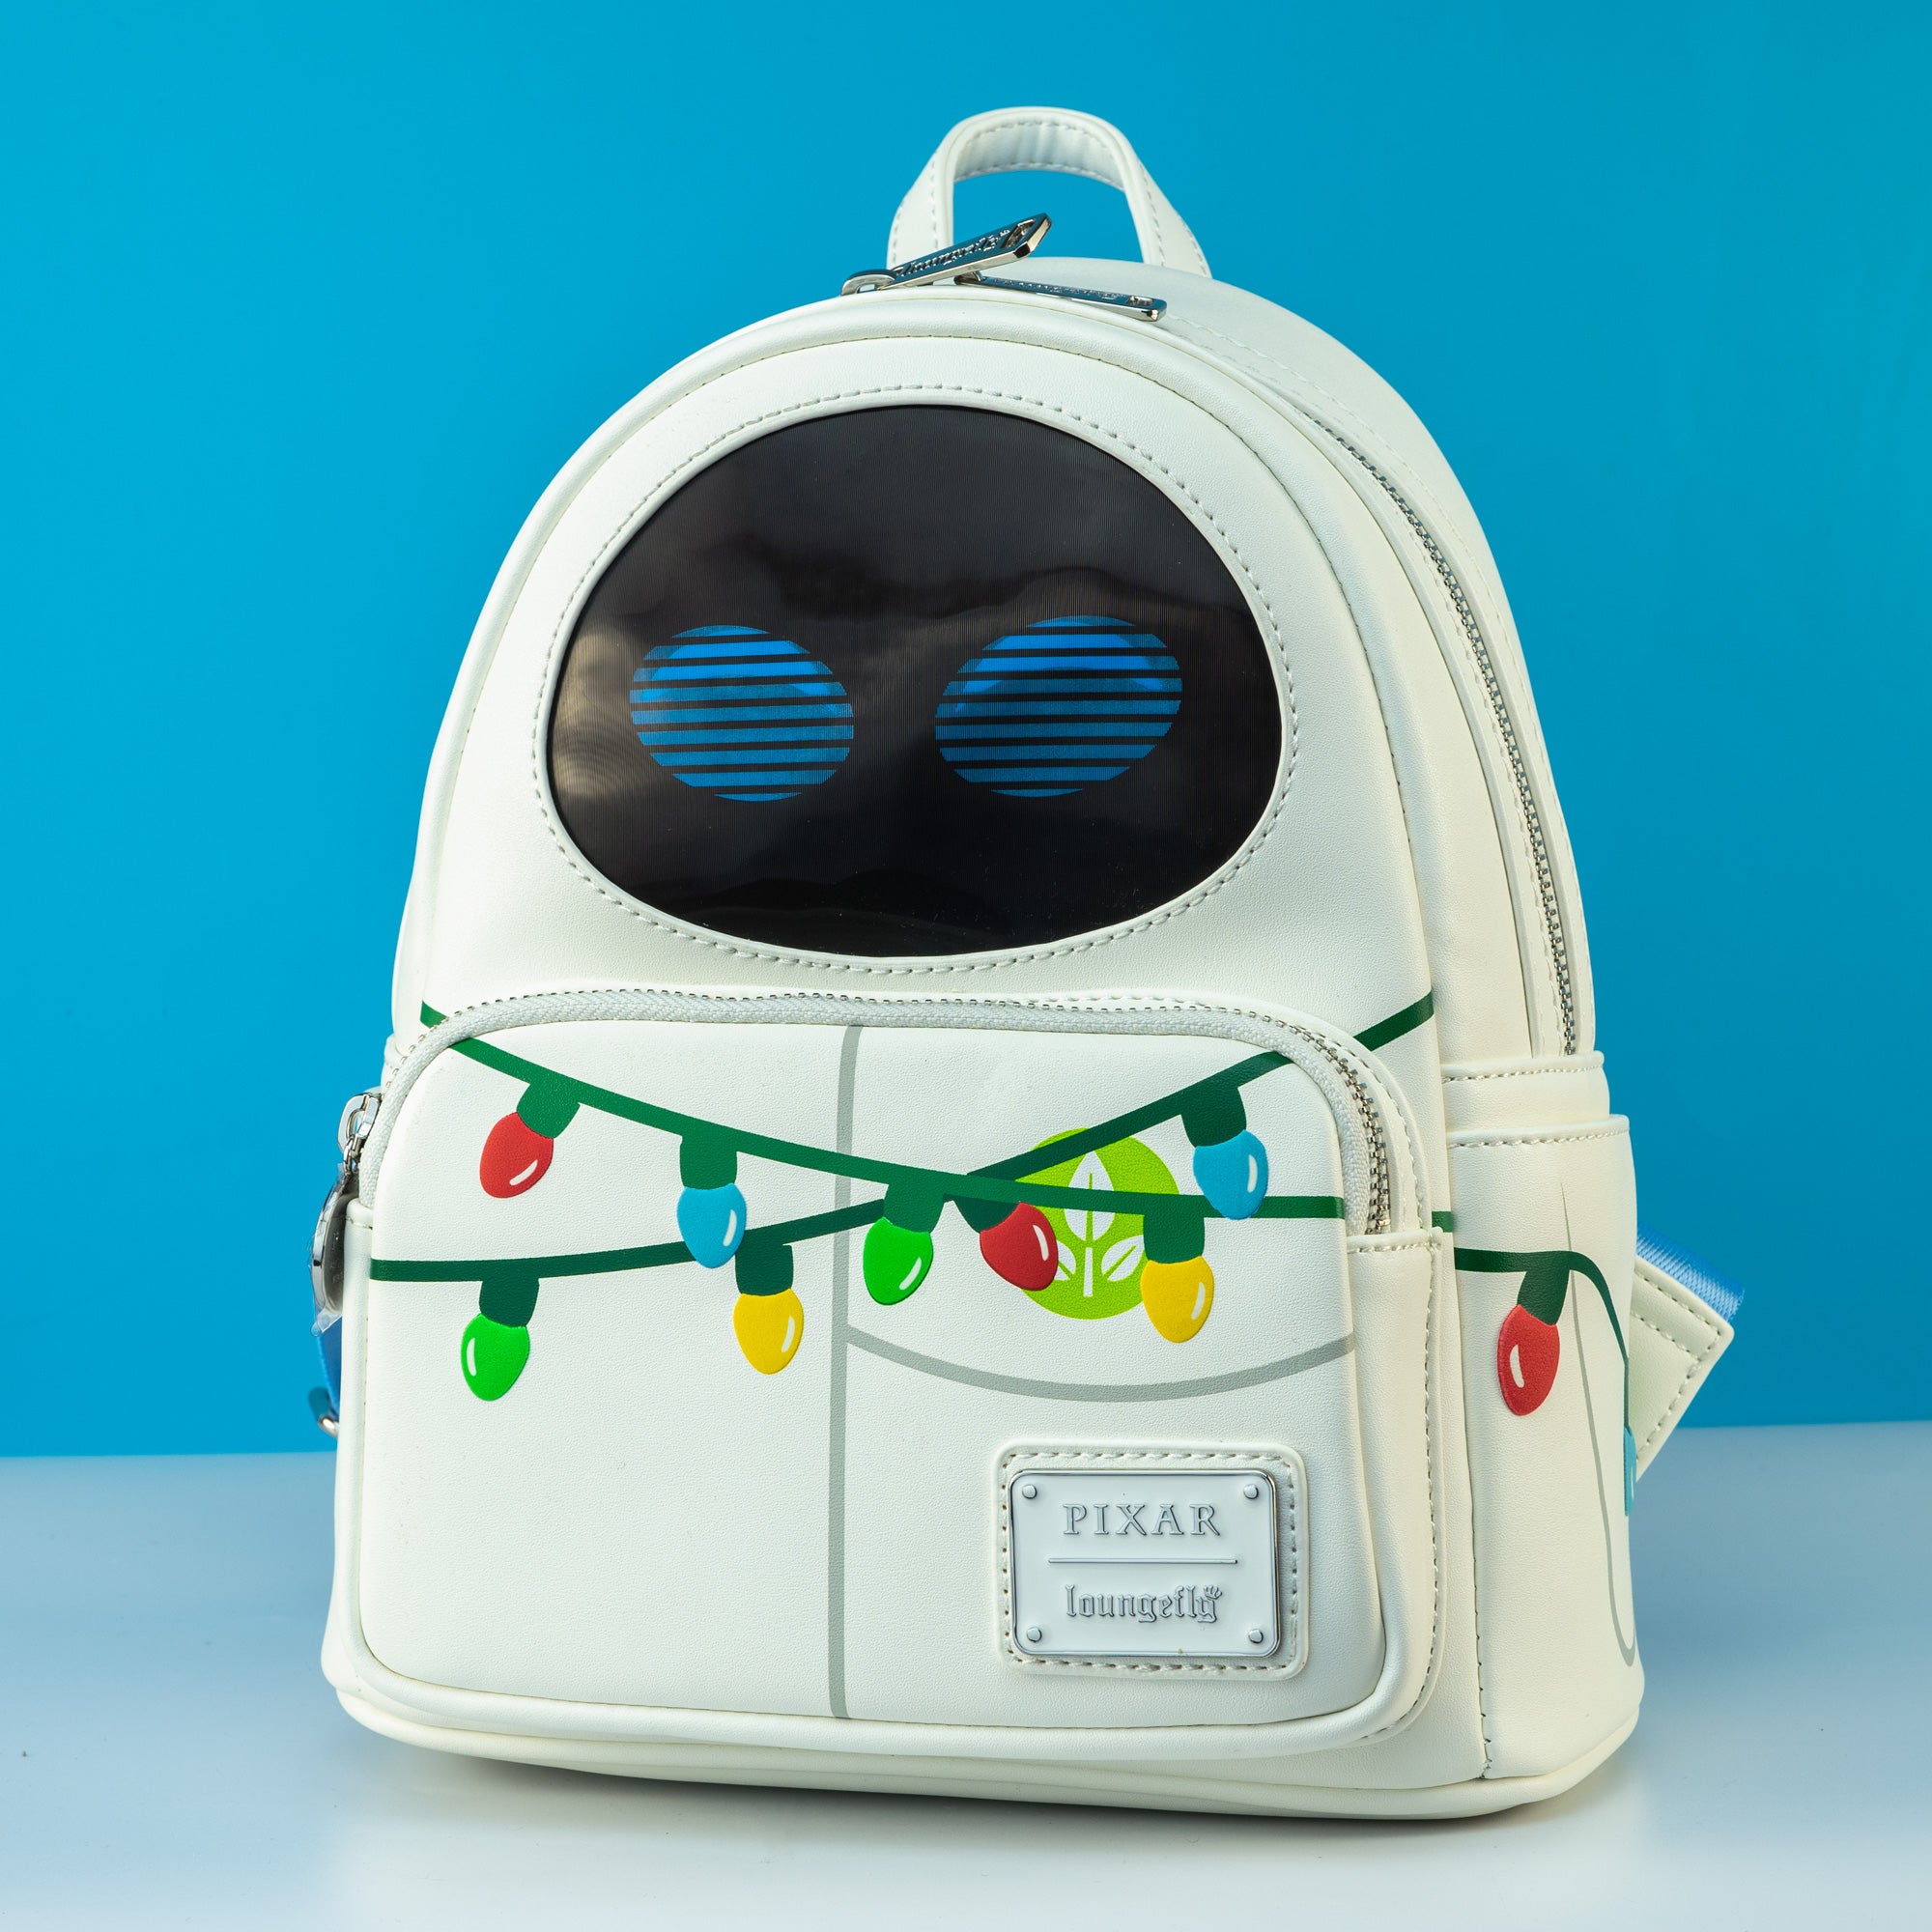 Loungefly x Pixar WALLE Eve Wearing Lights Cosplay Mini Backpack